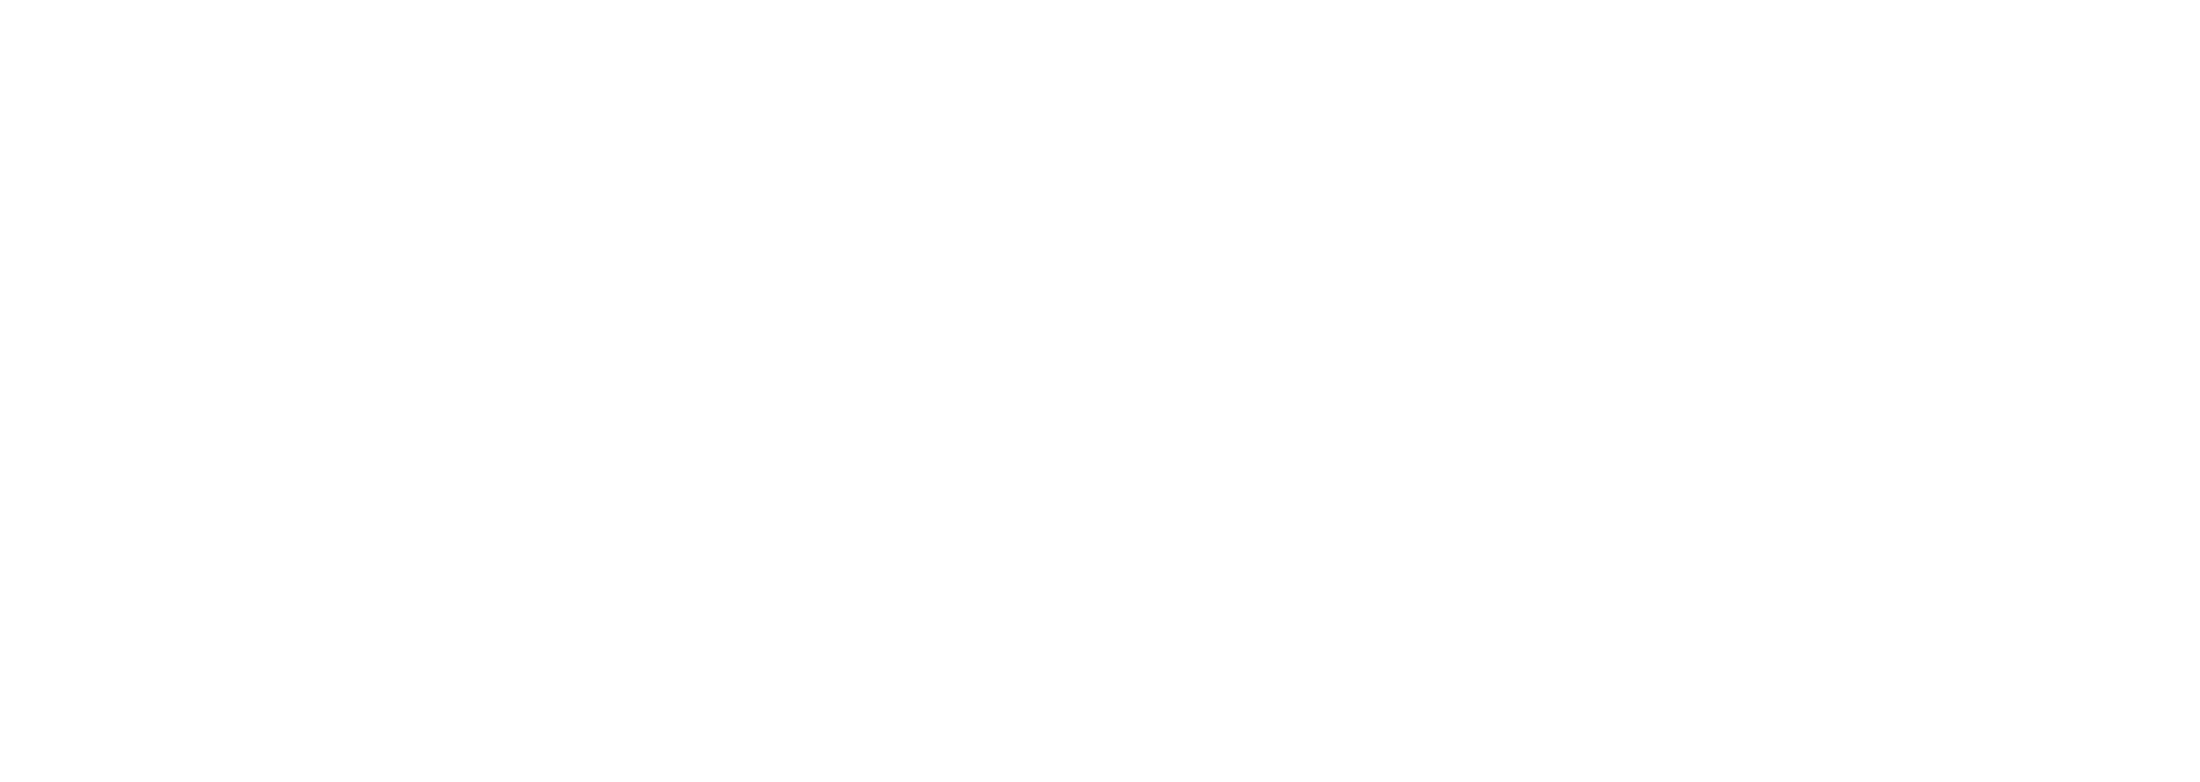 Wine & Book Hotels - White logo